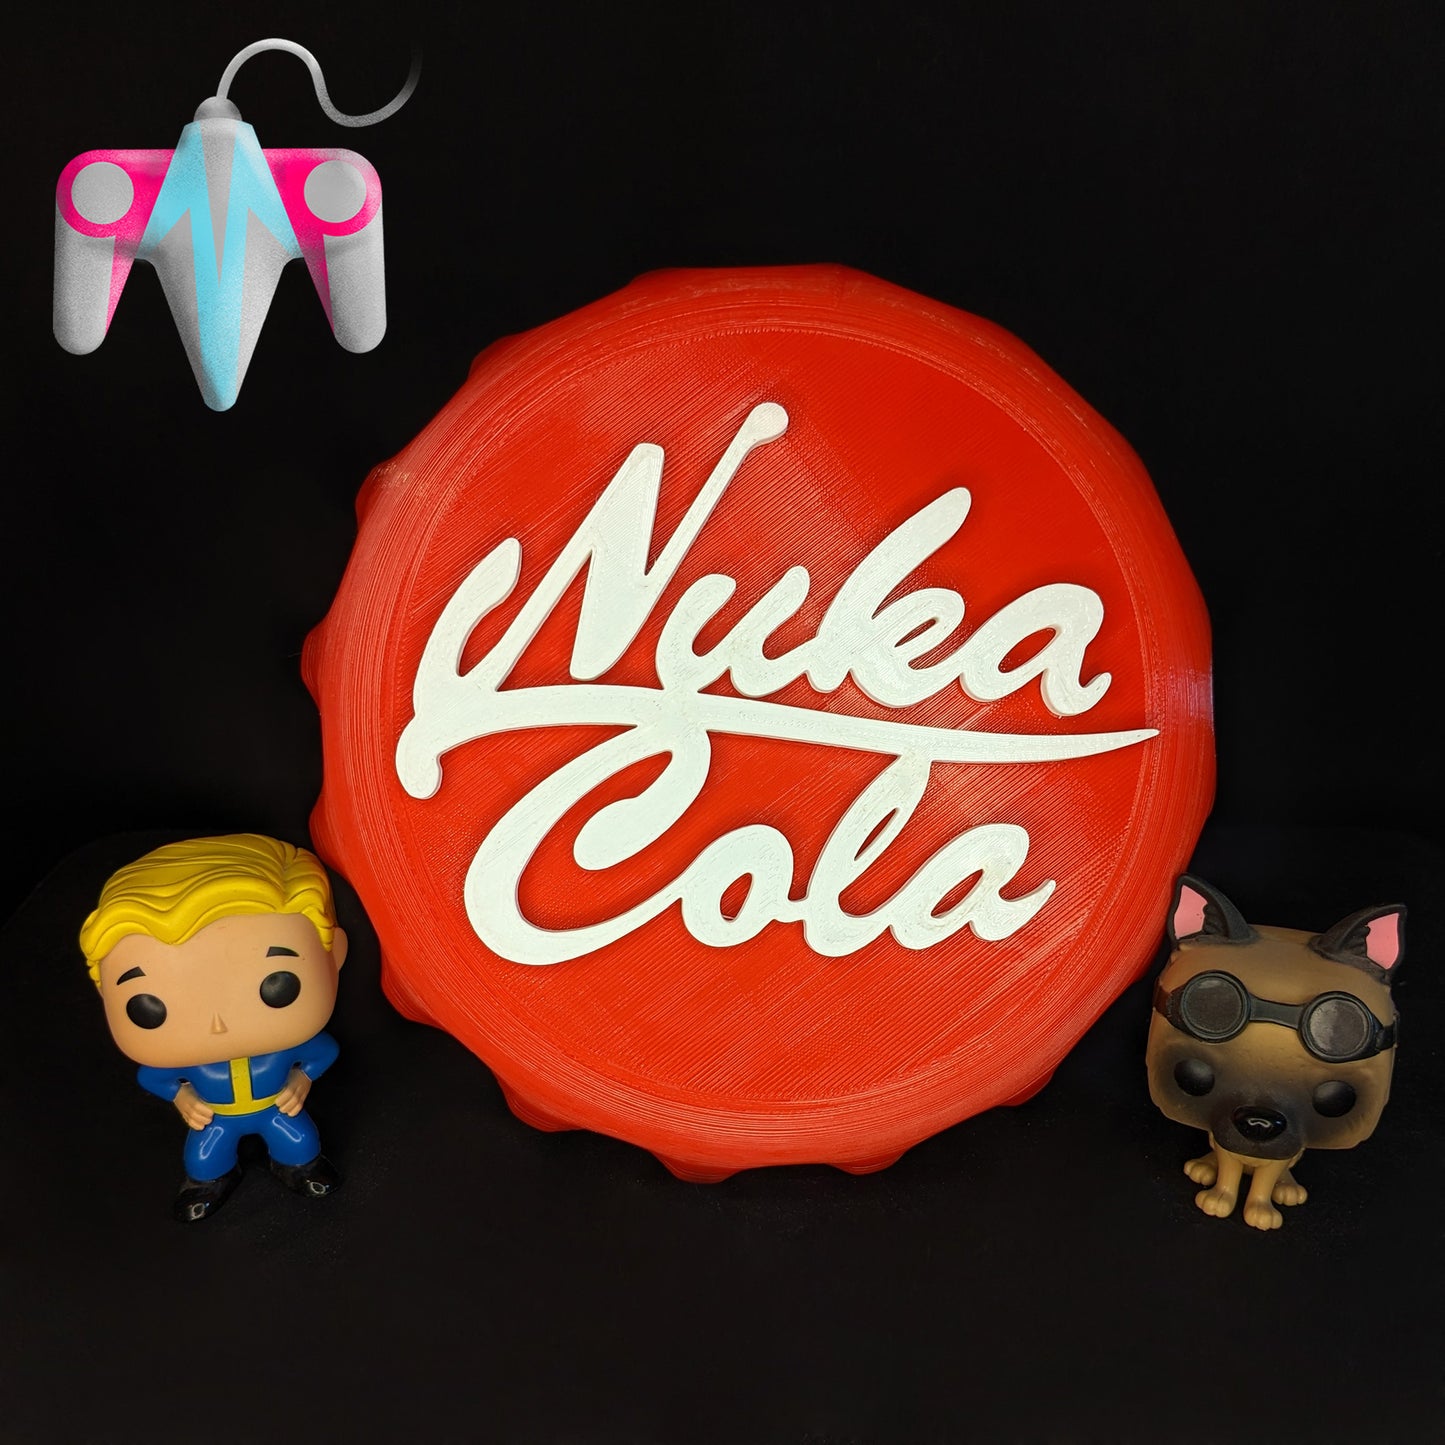 3D Printed Nuka Cola Bottle Cap Wall/Shelf Decor (FREE SHIPPING)